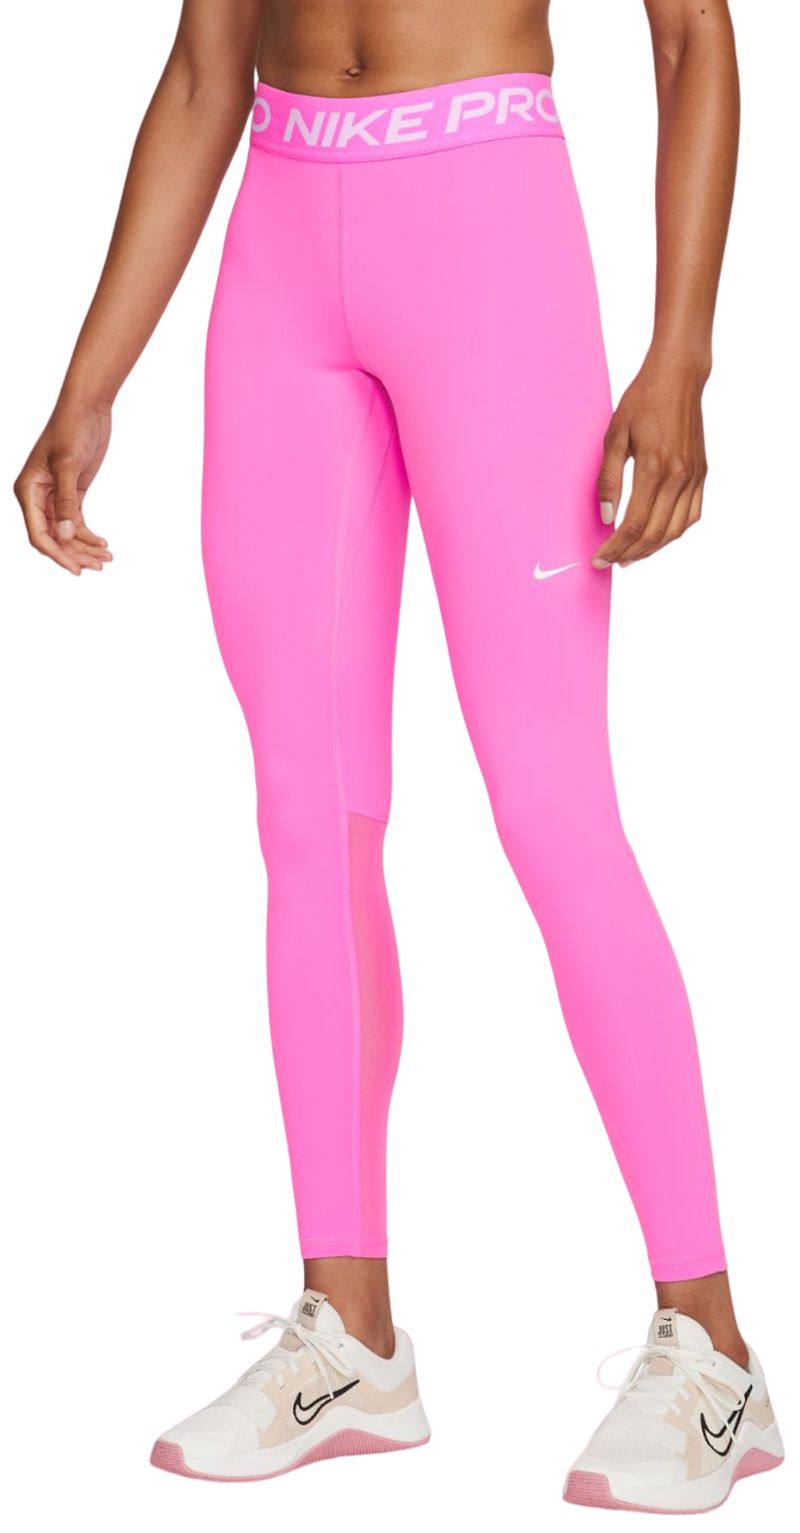 Leggins Nike Pro 365 Tight - playful pink/white, Tennis Zone